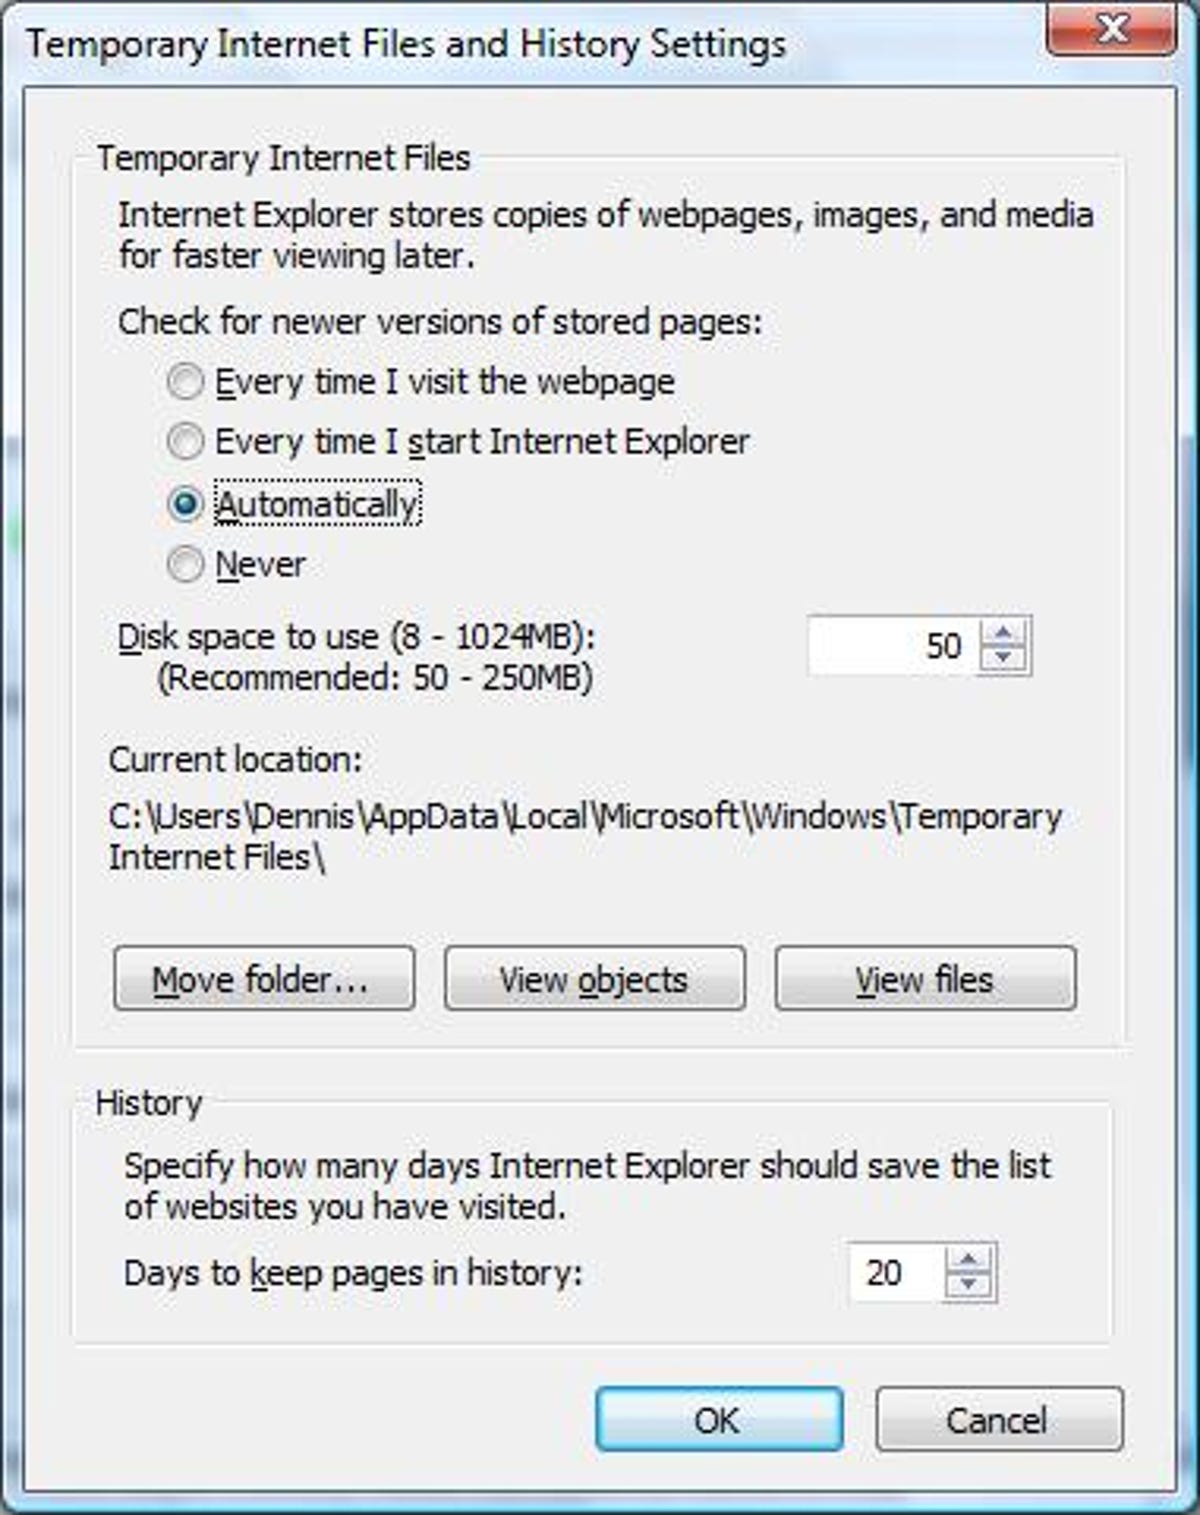 Microsoft Internet Explorer 7 Temporary Internet Files and History Settings dialog box